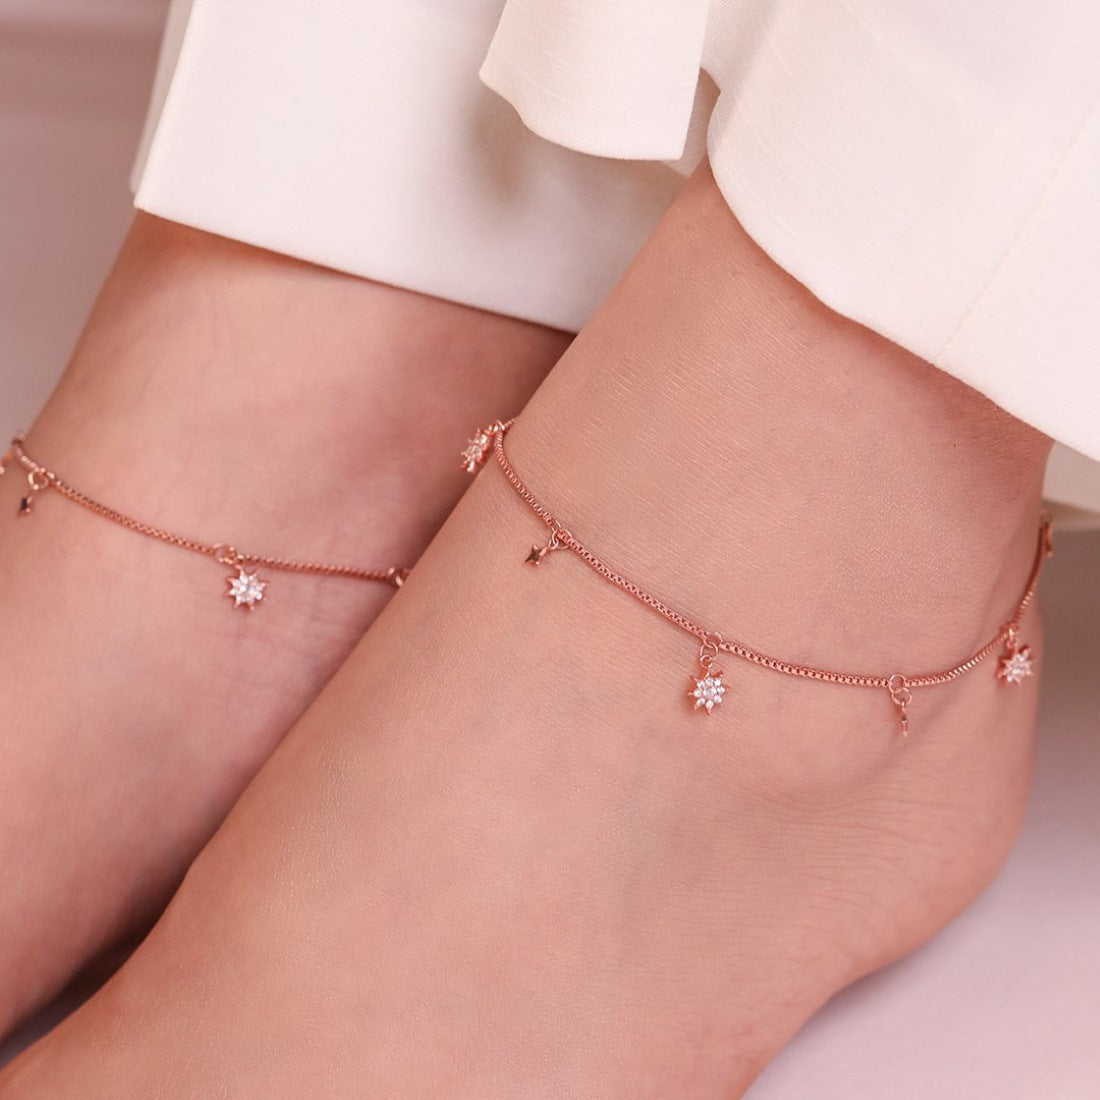 Enchanting Star 925 Silver Anklets In Rose Gold